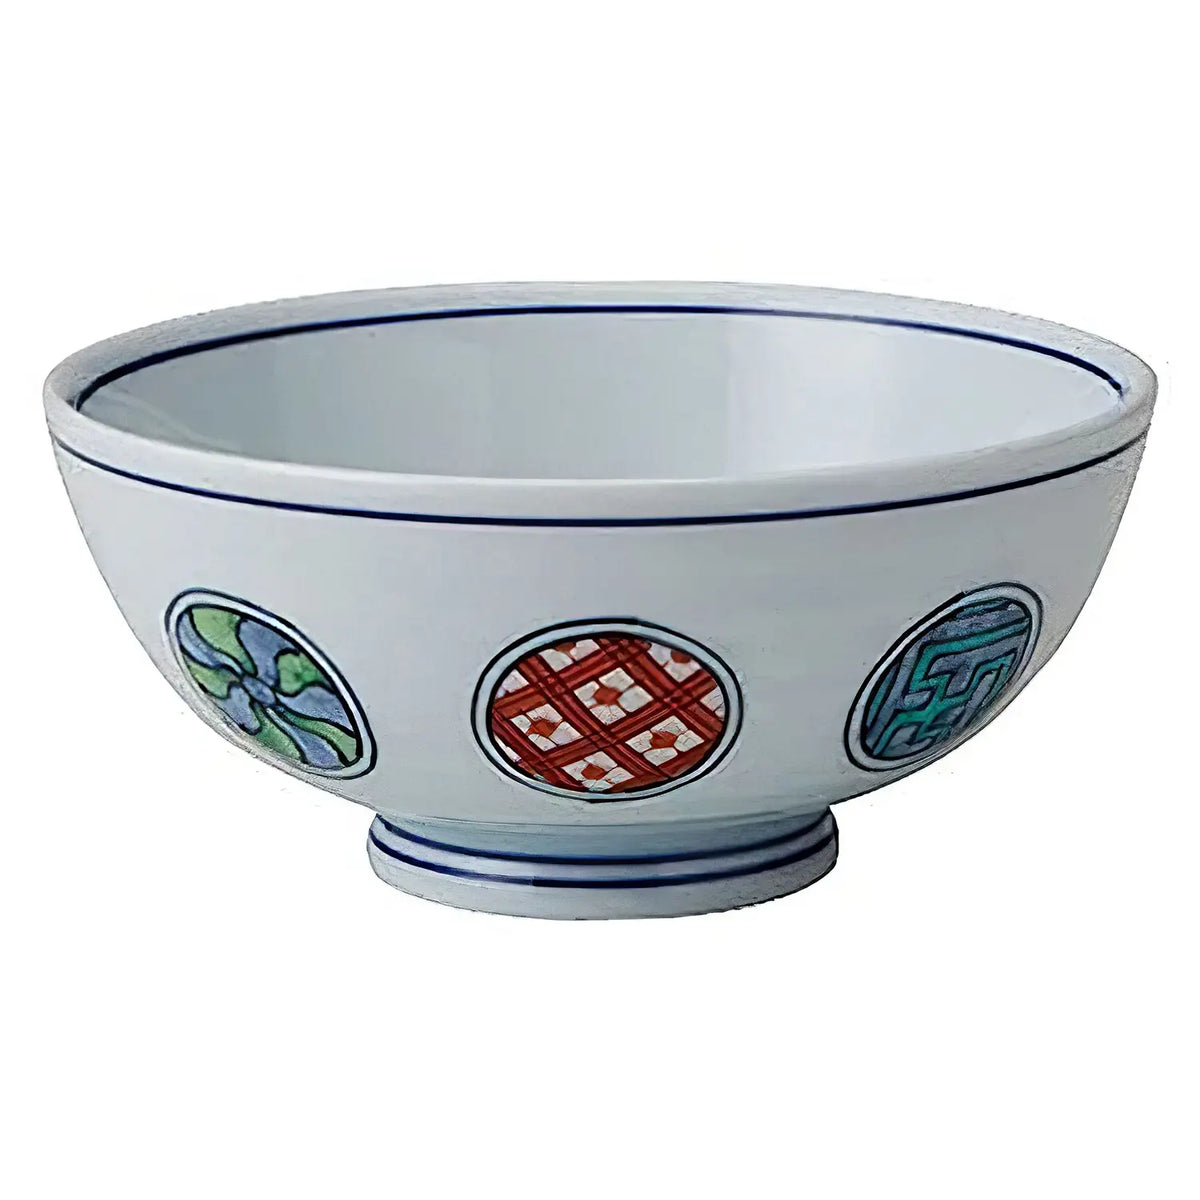 TKG Mino Ware Porcelain Tempered Rice Bowl Marumon 11.5cm